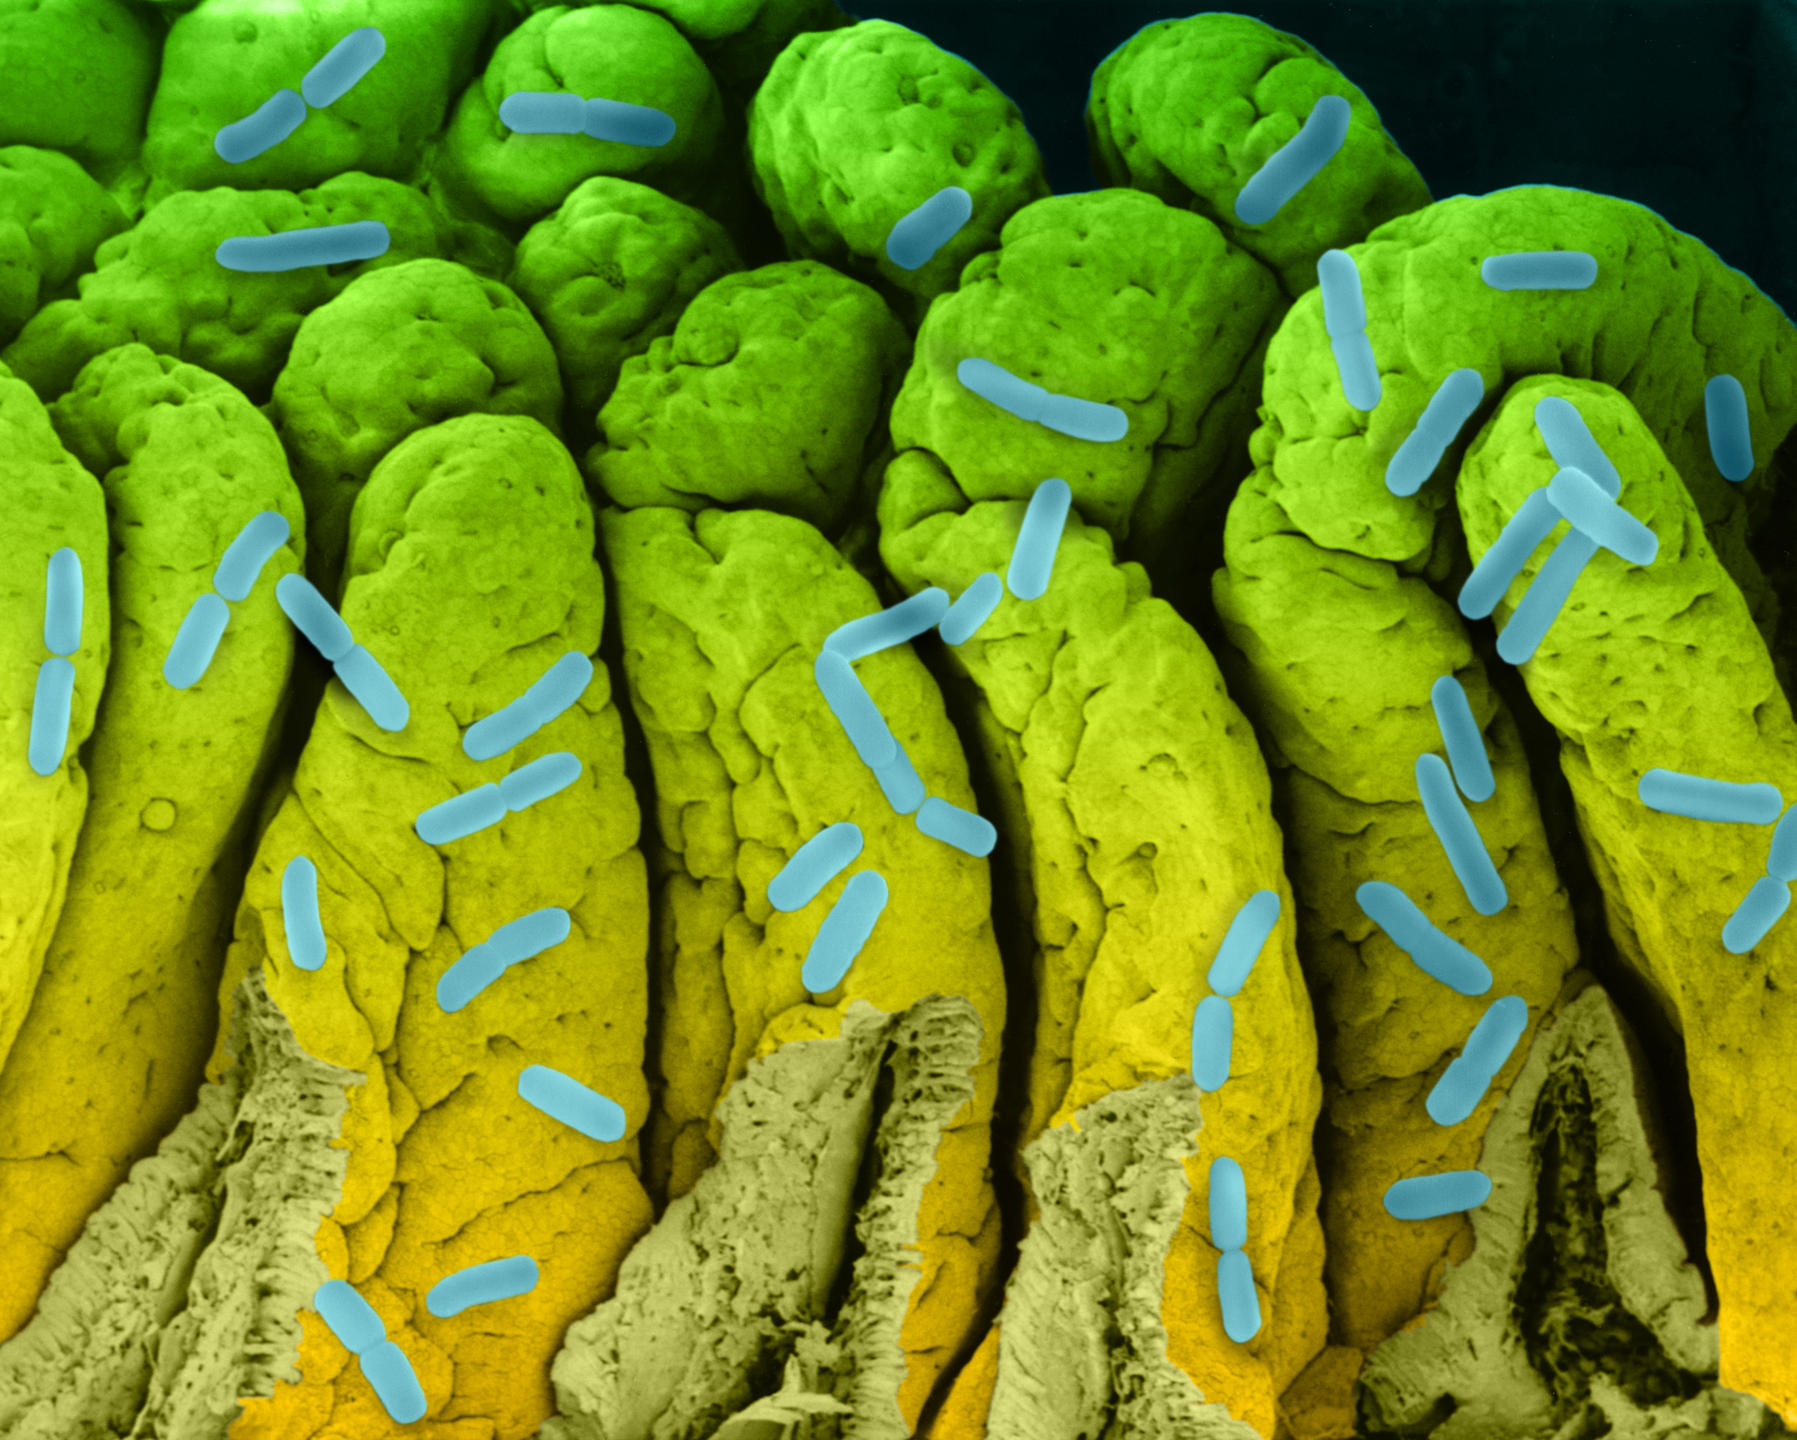 Bactérie e-coli